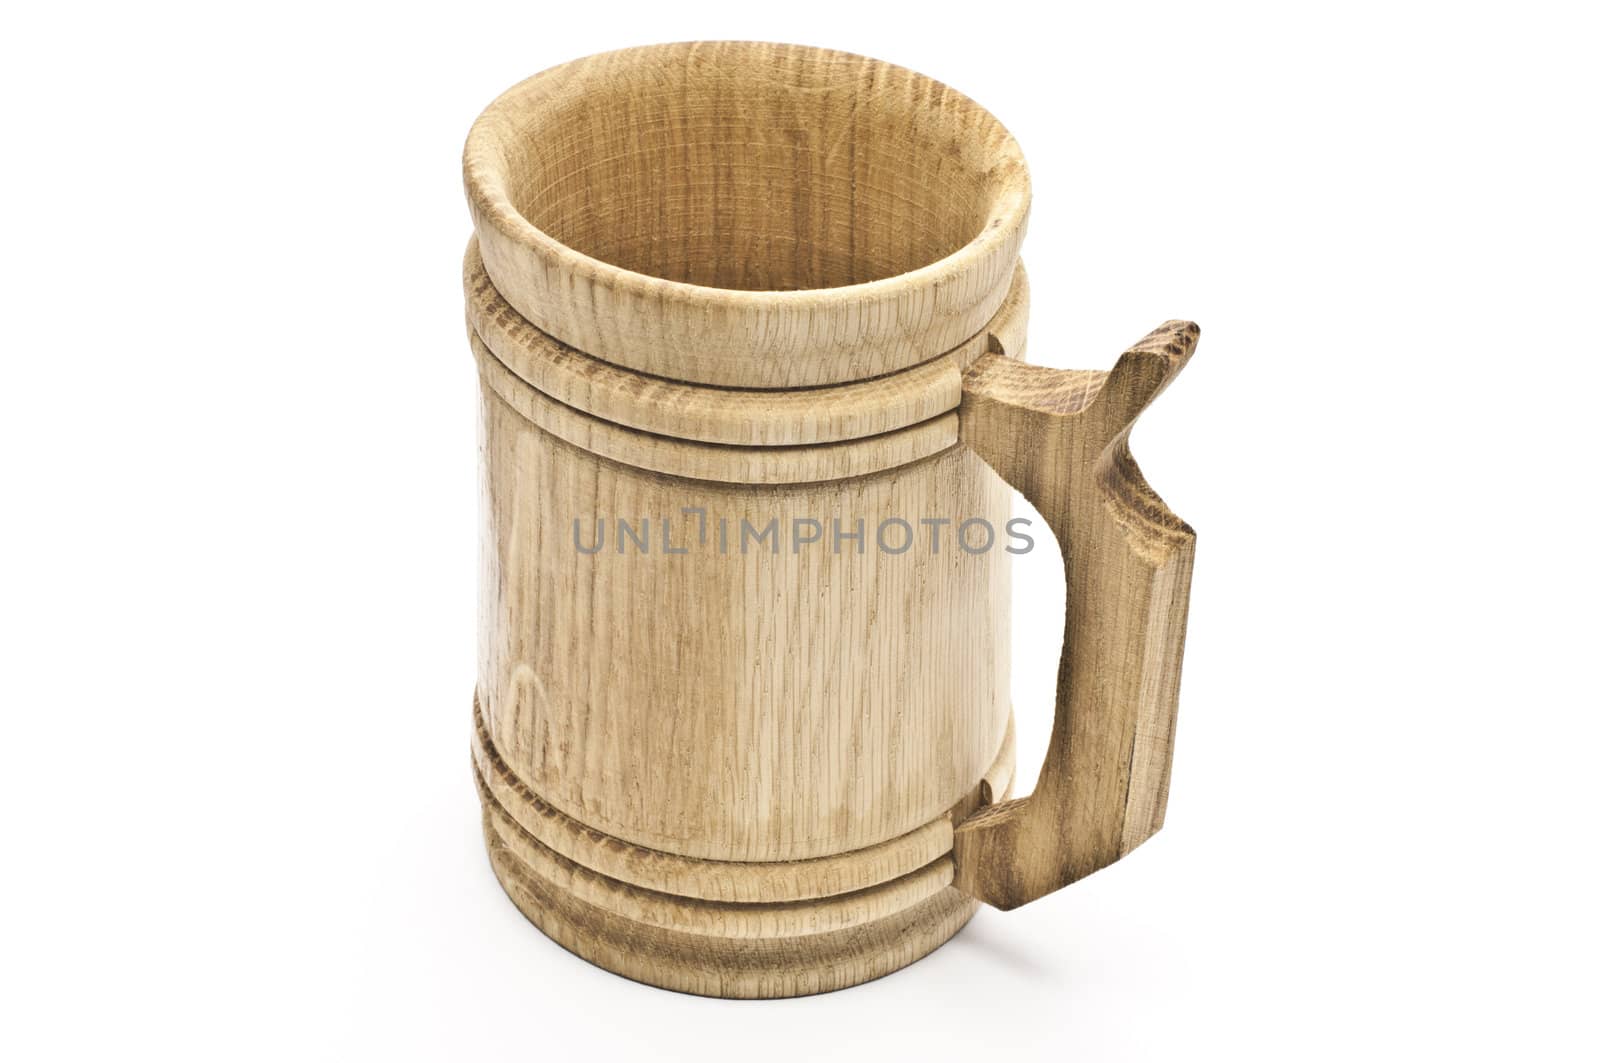 Wooden beer mug on a white background